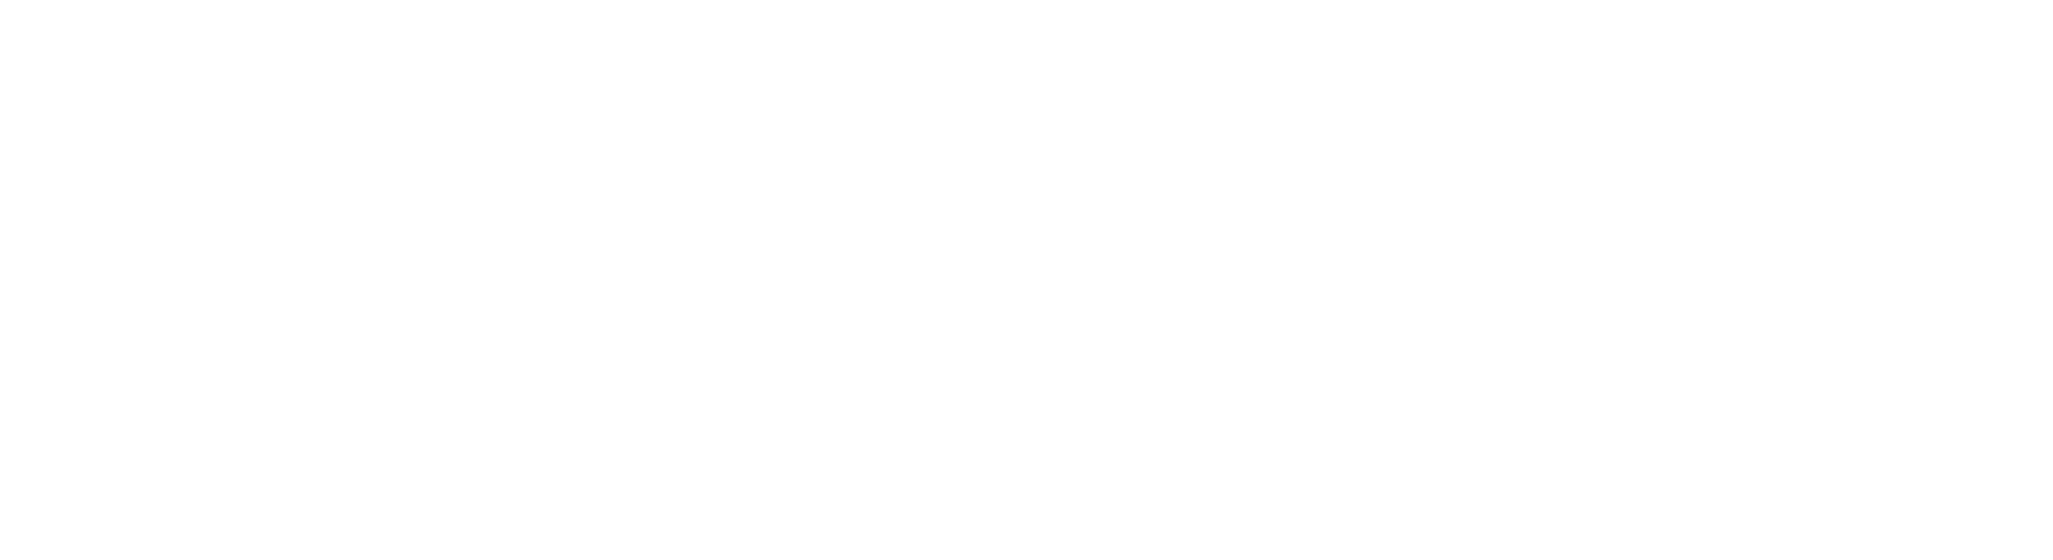 Stratodesk Logo Horizontal Reverse Solid